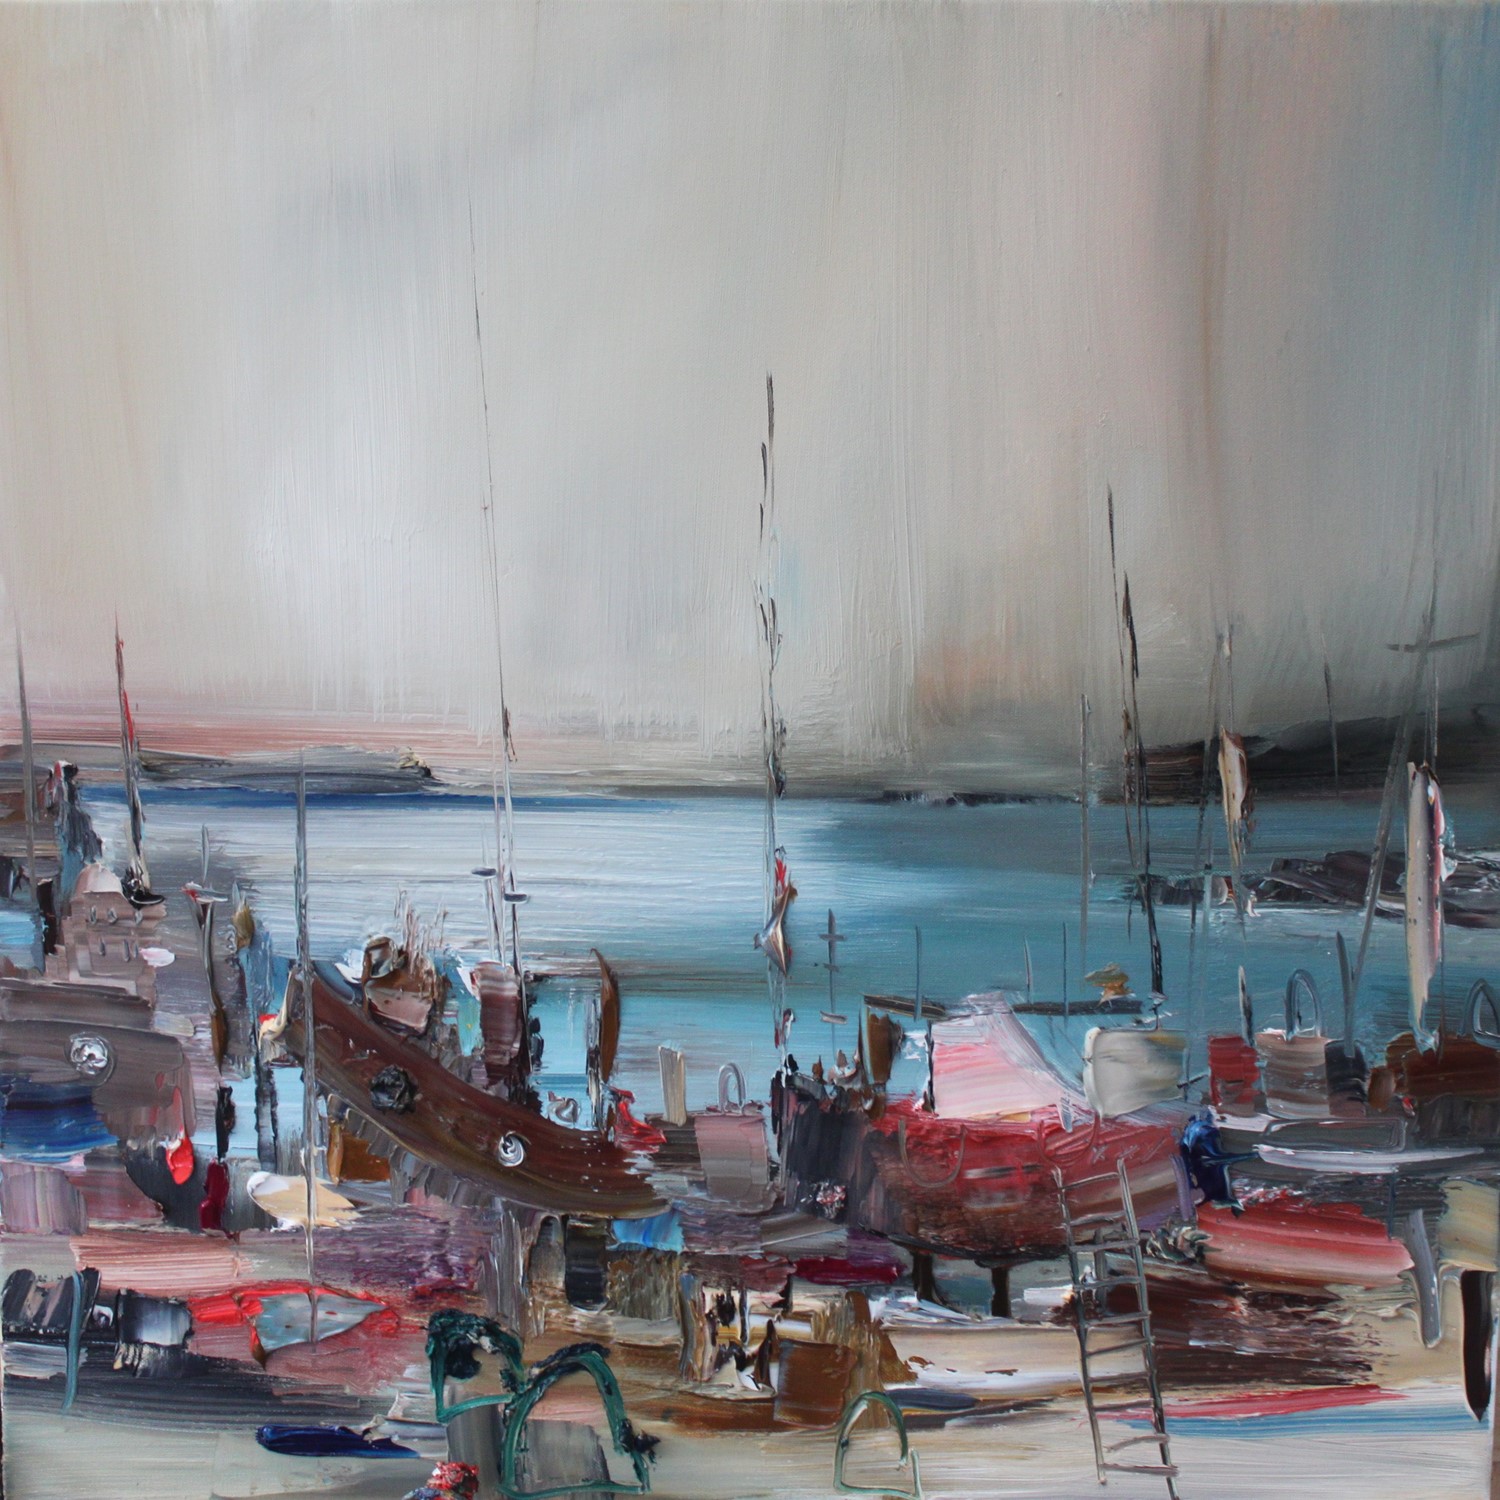 'A shamble of Boats' by artist Rosanne Barr